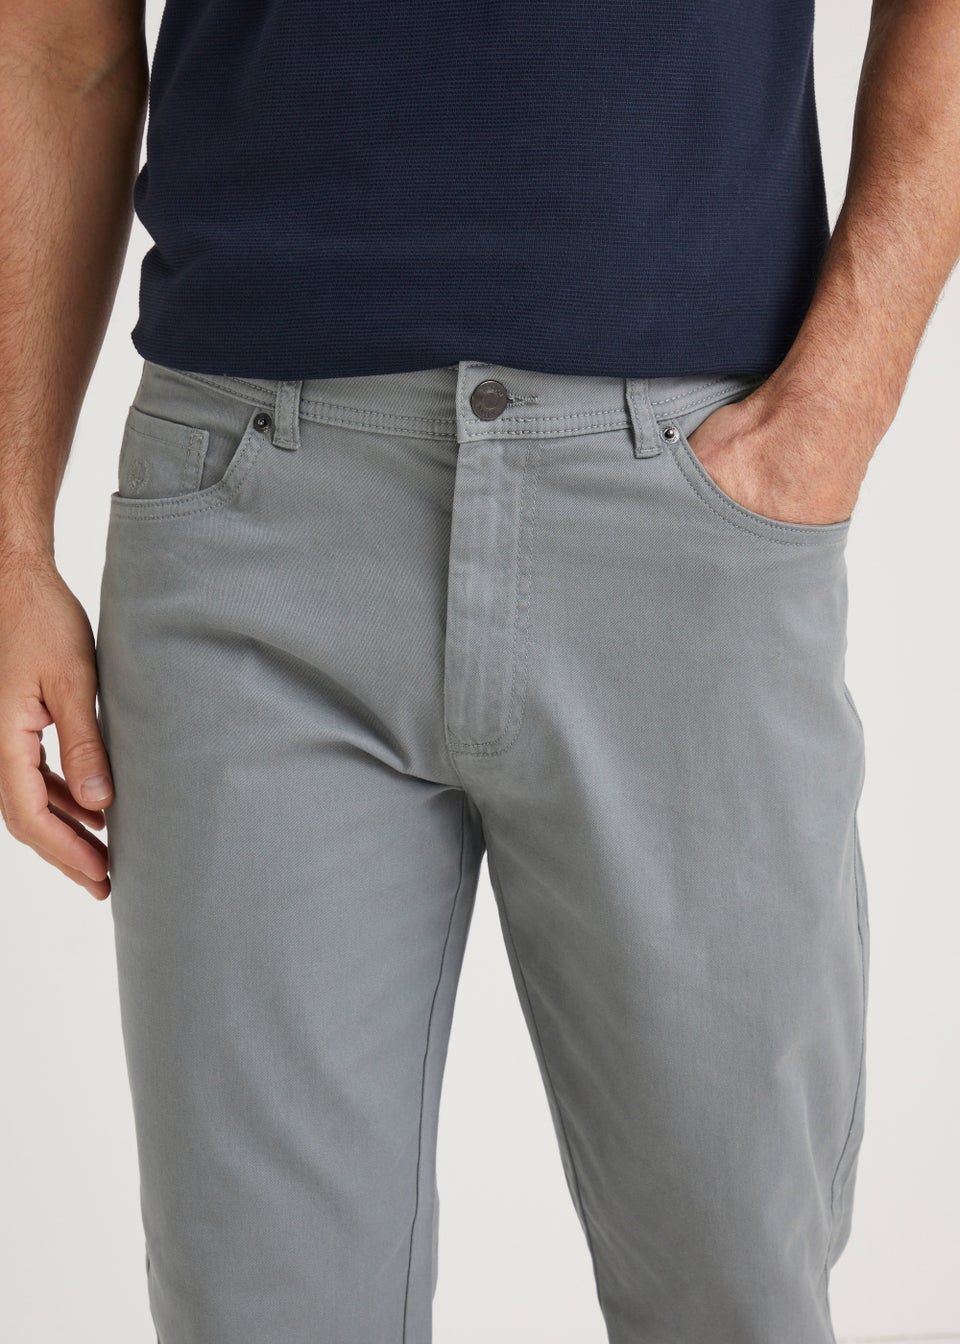 Lincoln Green 5 Pocket Trousers - Matalan